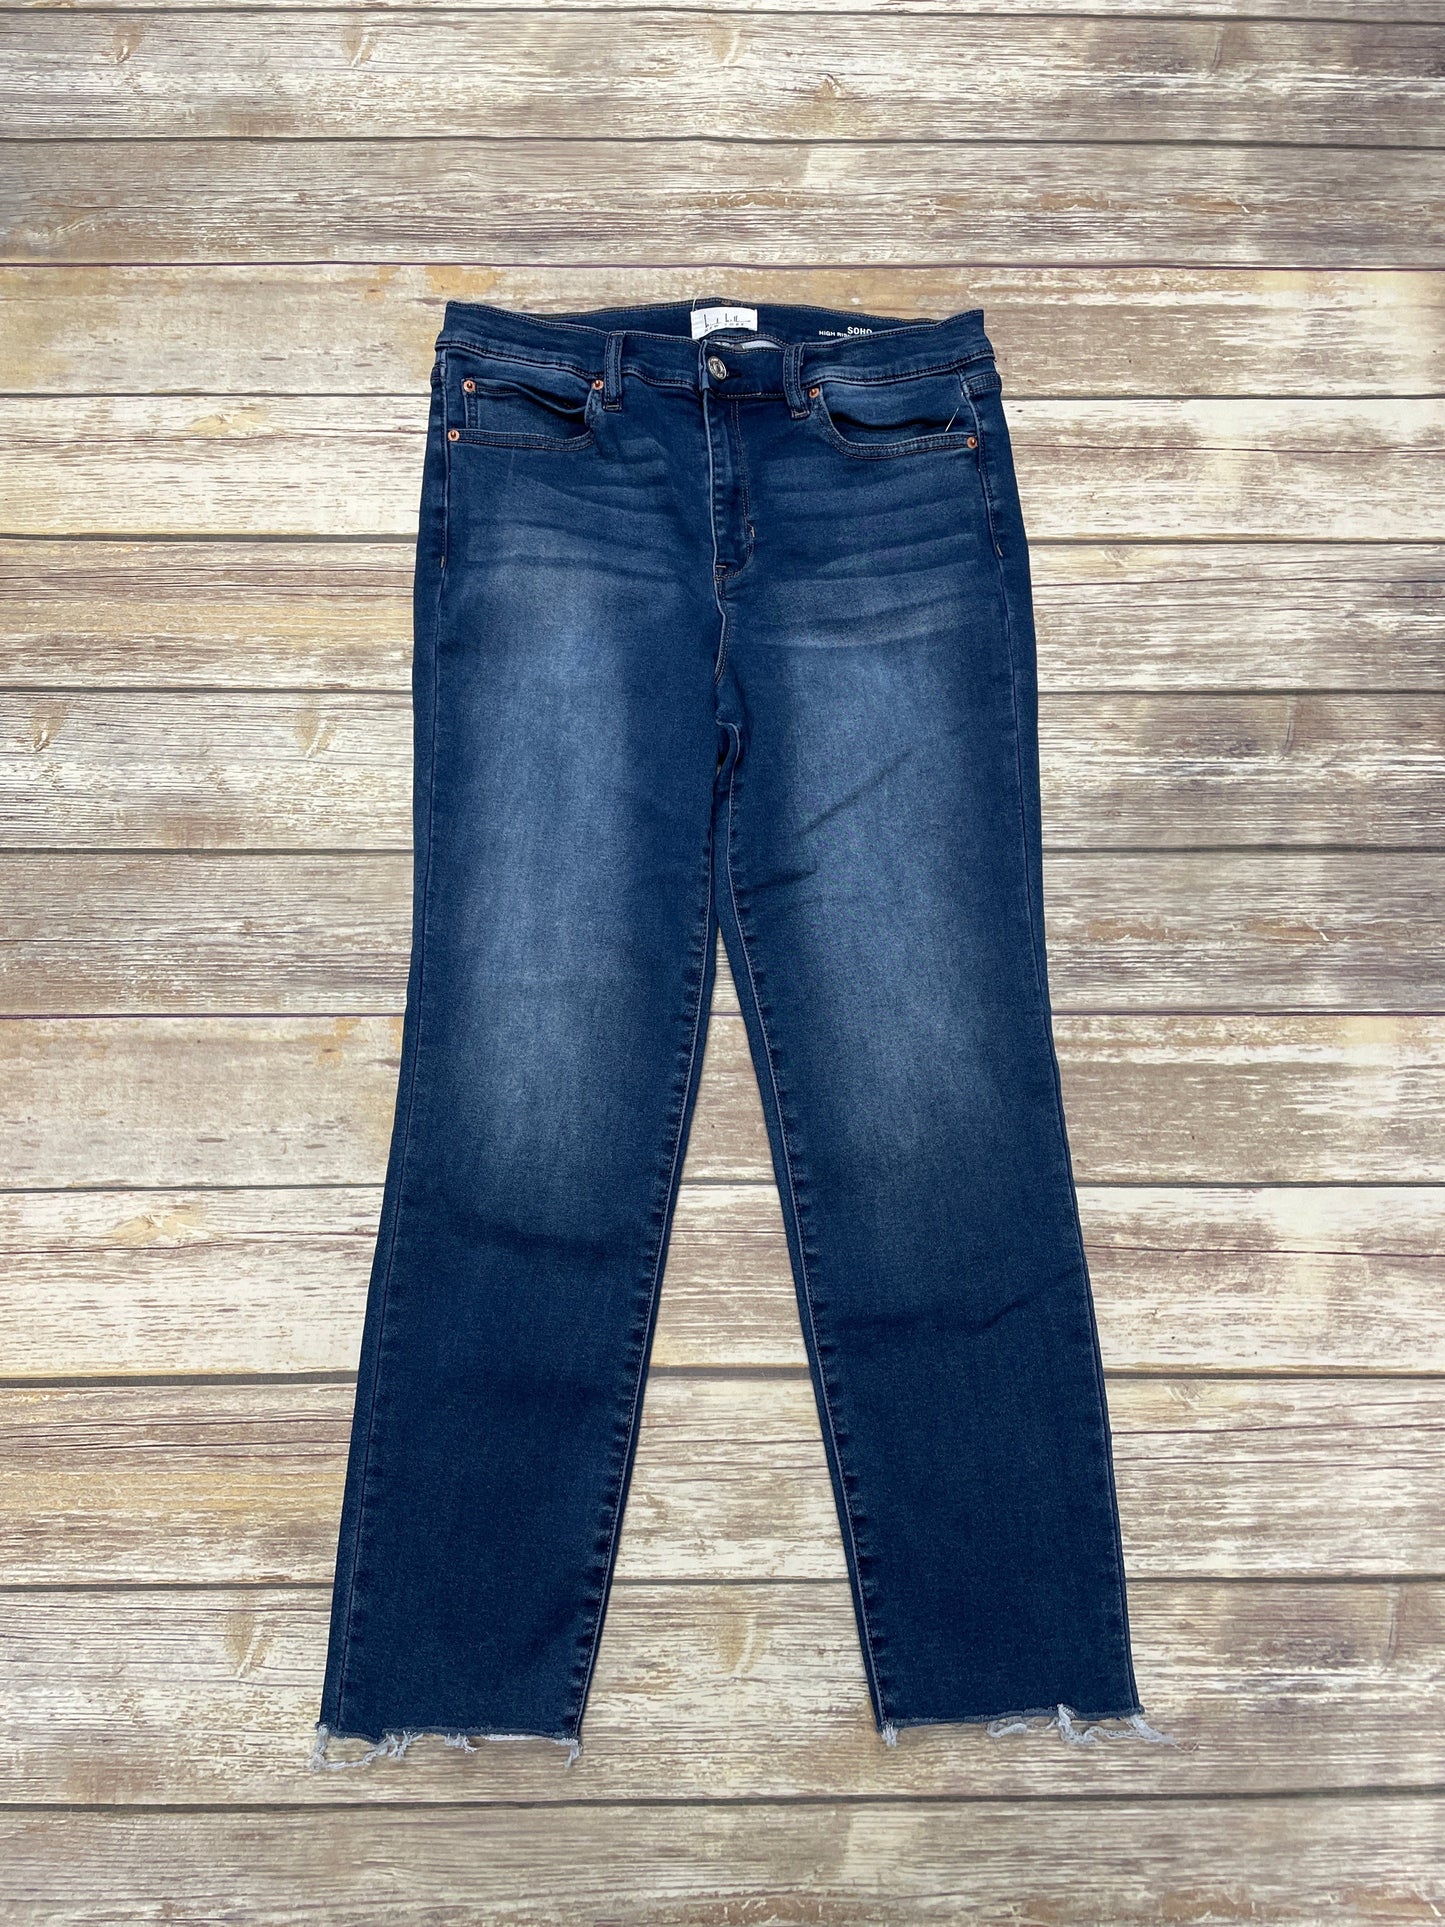 Blue Denim Jeans Skinny Nicole Miller, Size 12